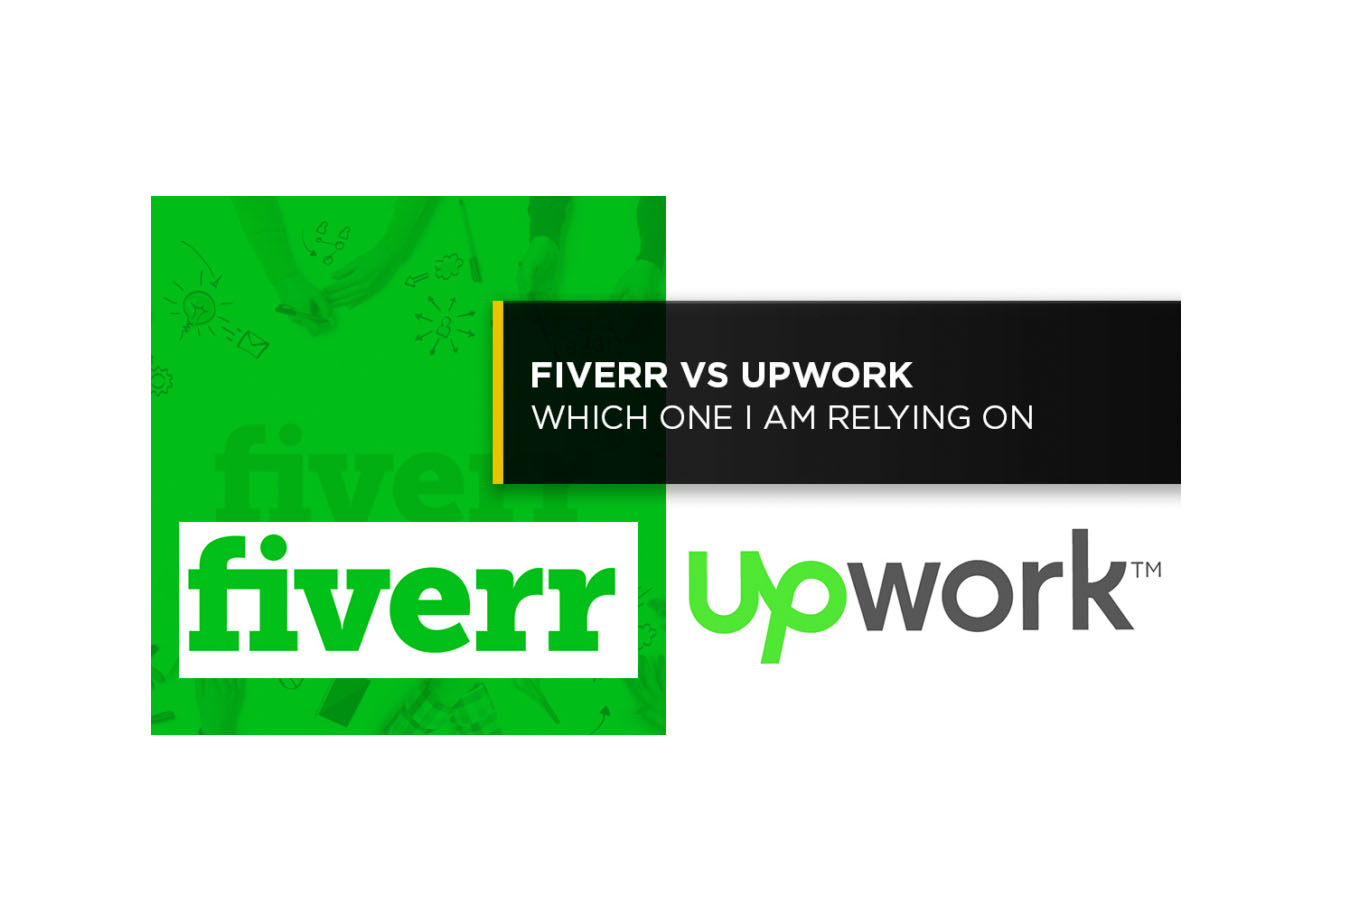 Is Upwork Better Than Fiverr? - Fiverr Vs Upwork Comparison